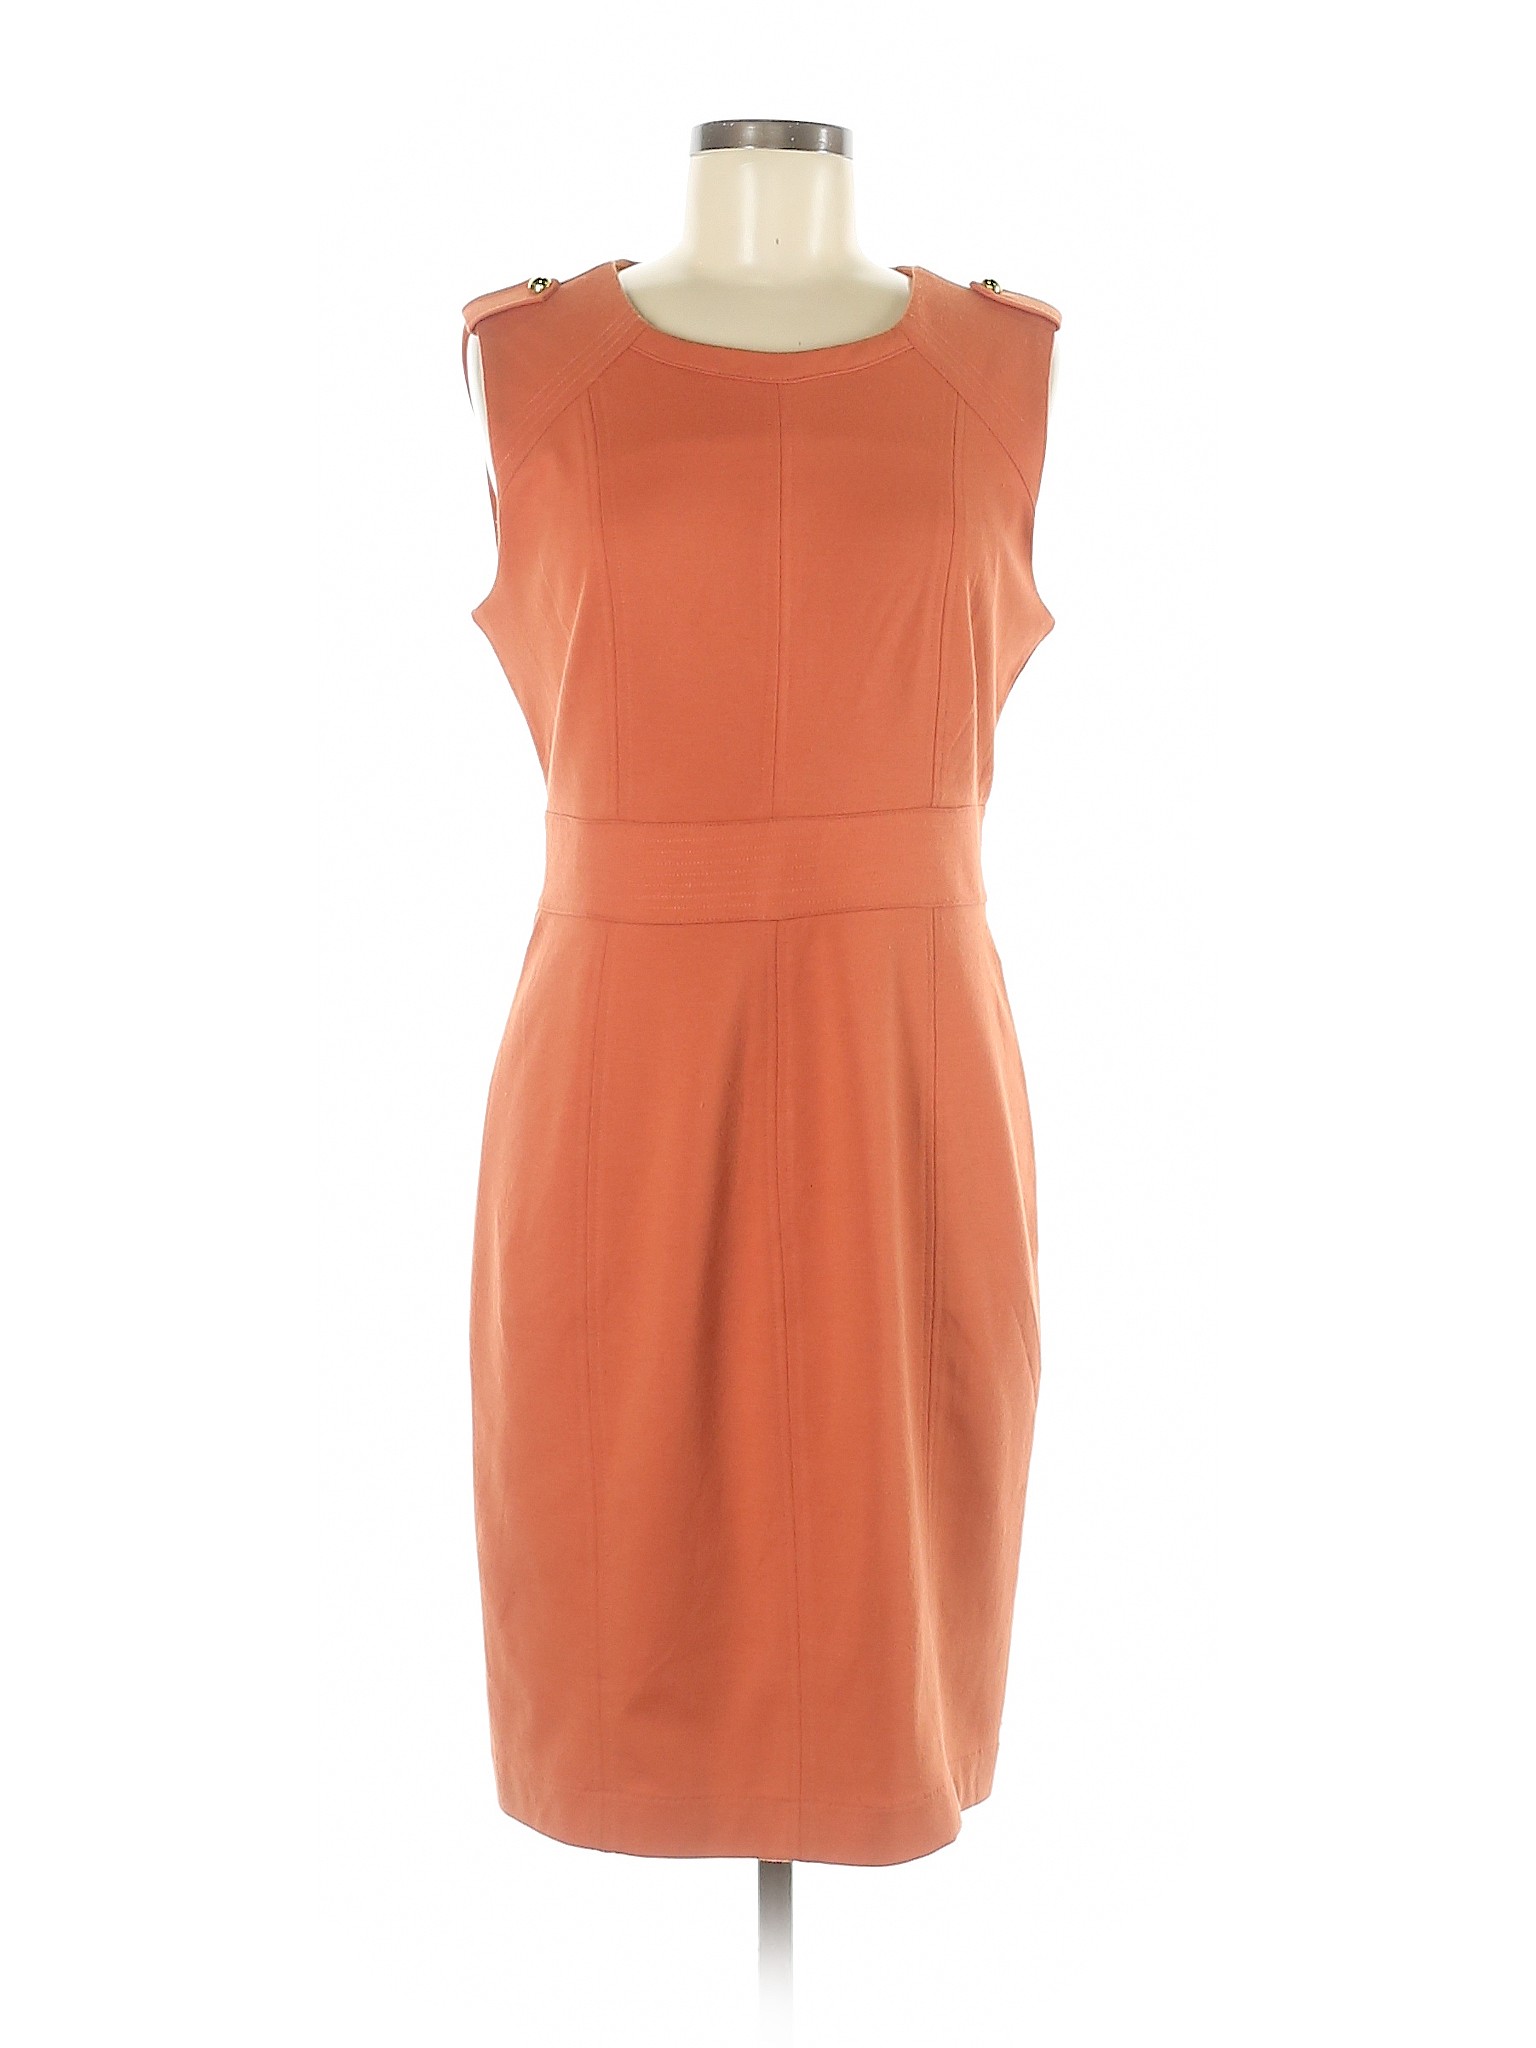 Banana Republic Factory Store Women Orange Casual Dress 8 | eBay